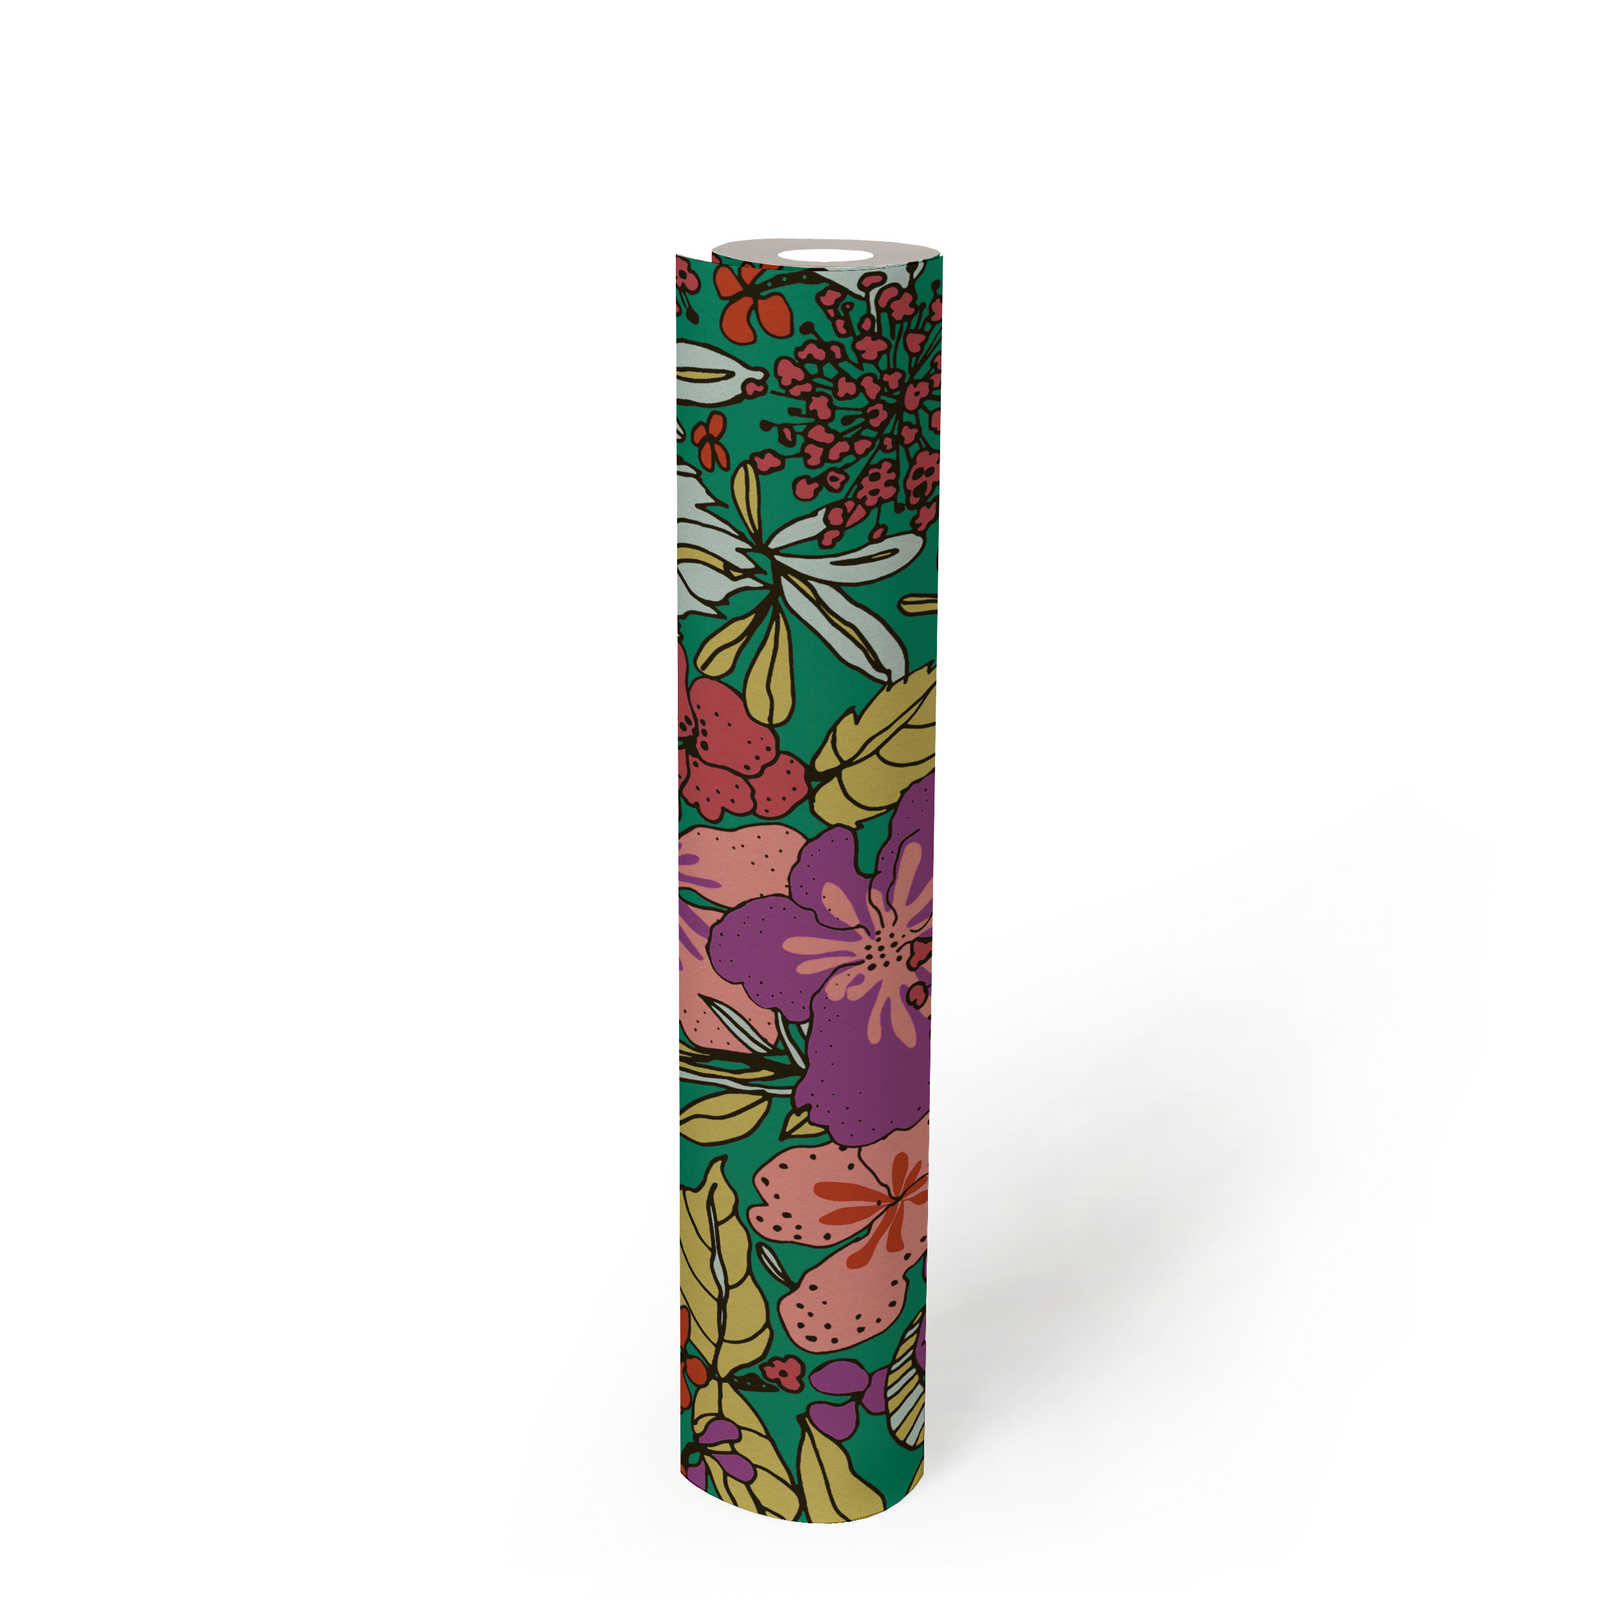             Tapete Blumen Muster bunt im Colour Block Stil – Bunt, Grün, Rot
        